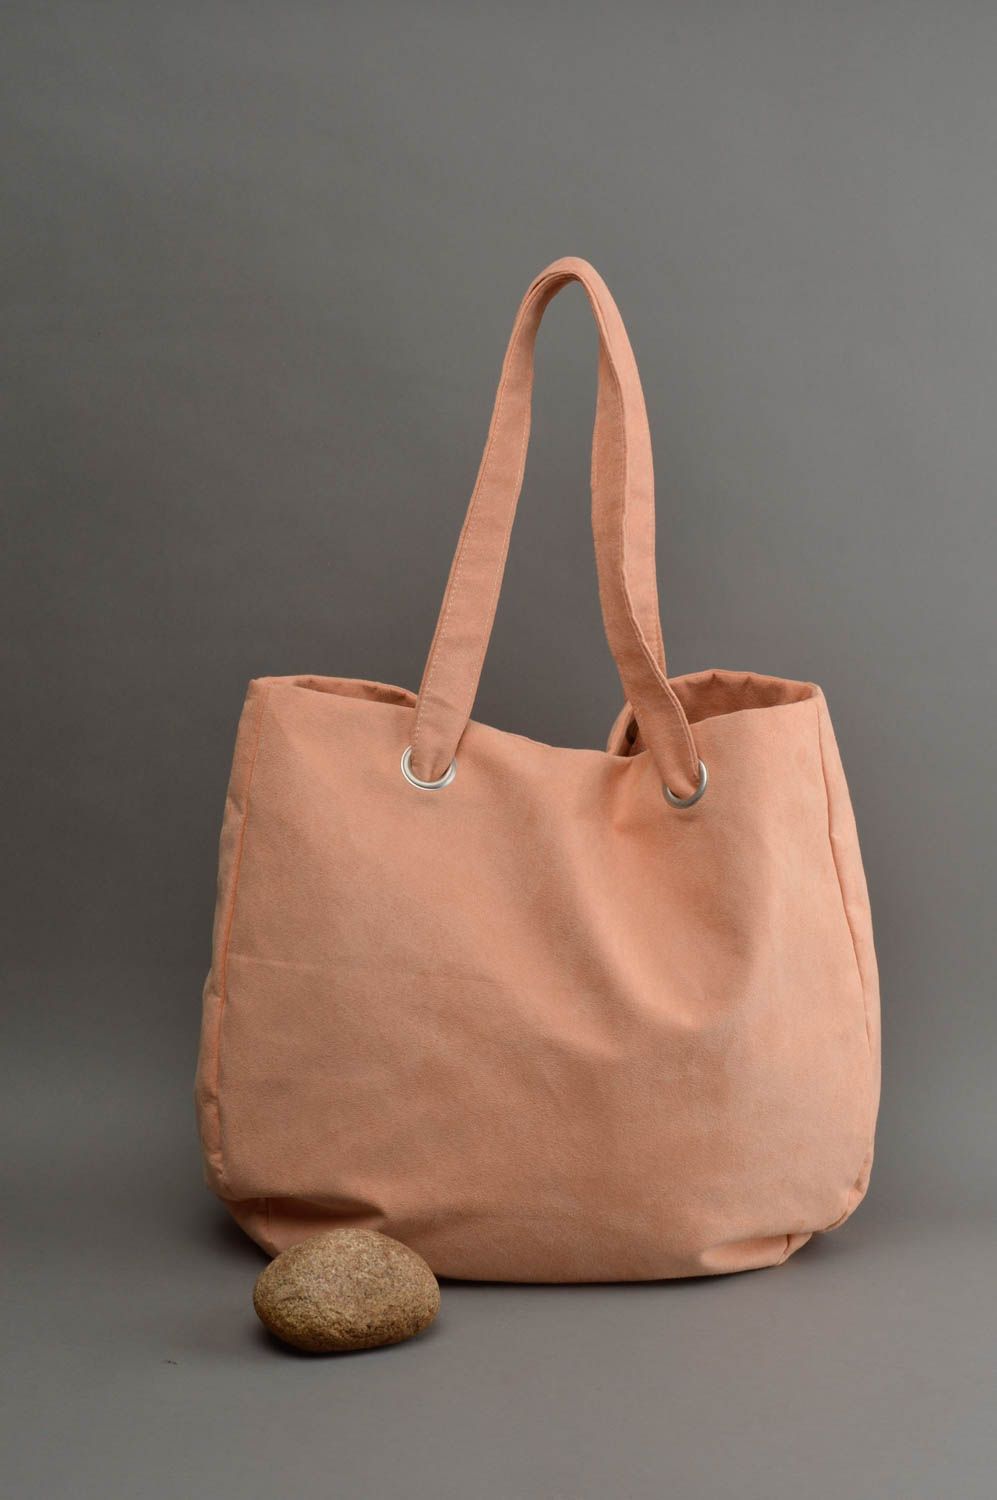 Large bag handmade cloth handbag pink fabric purse accessories for women photo 1